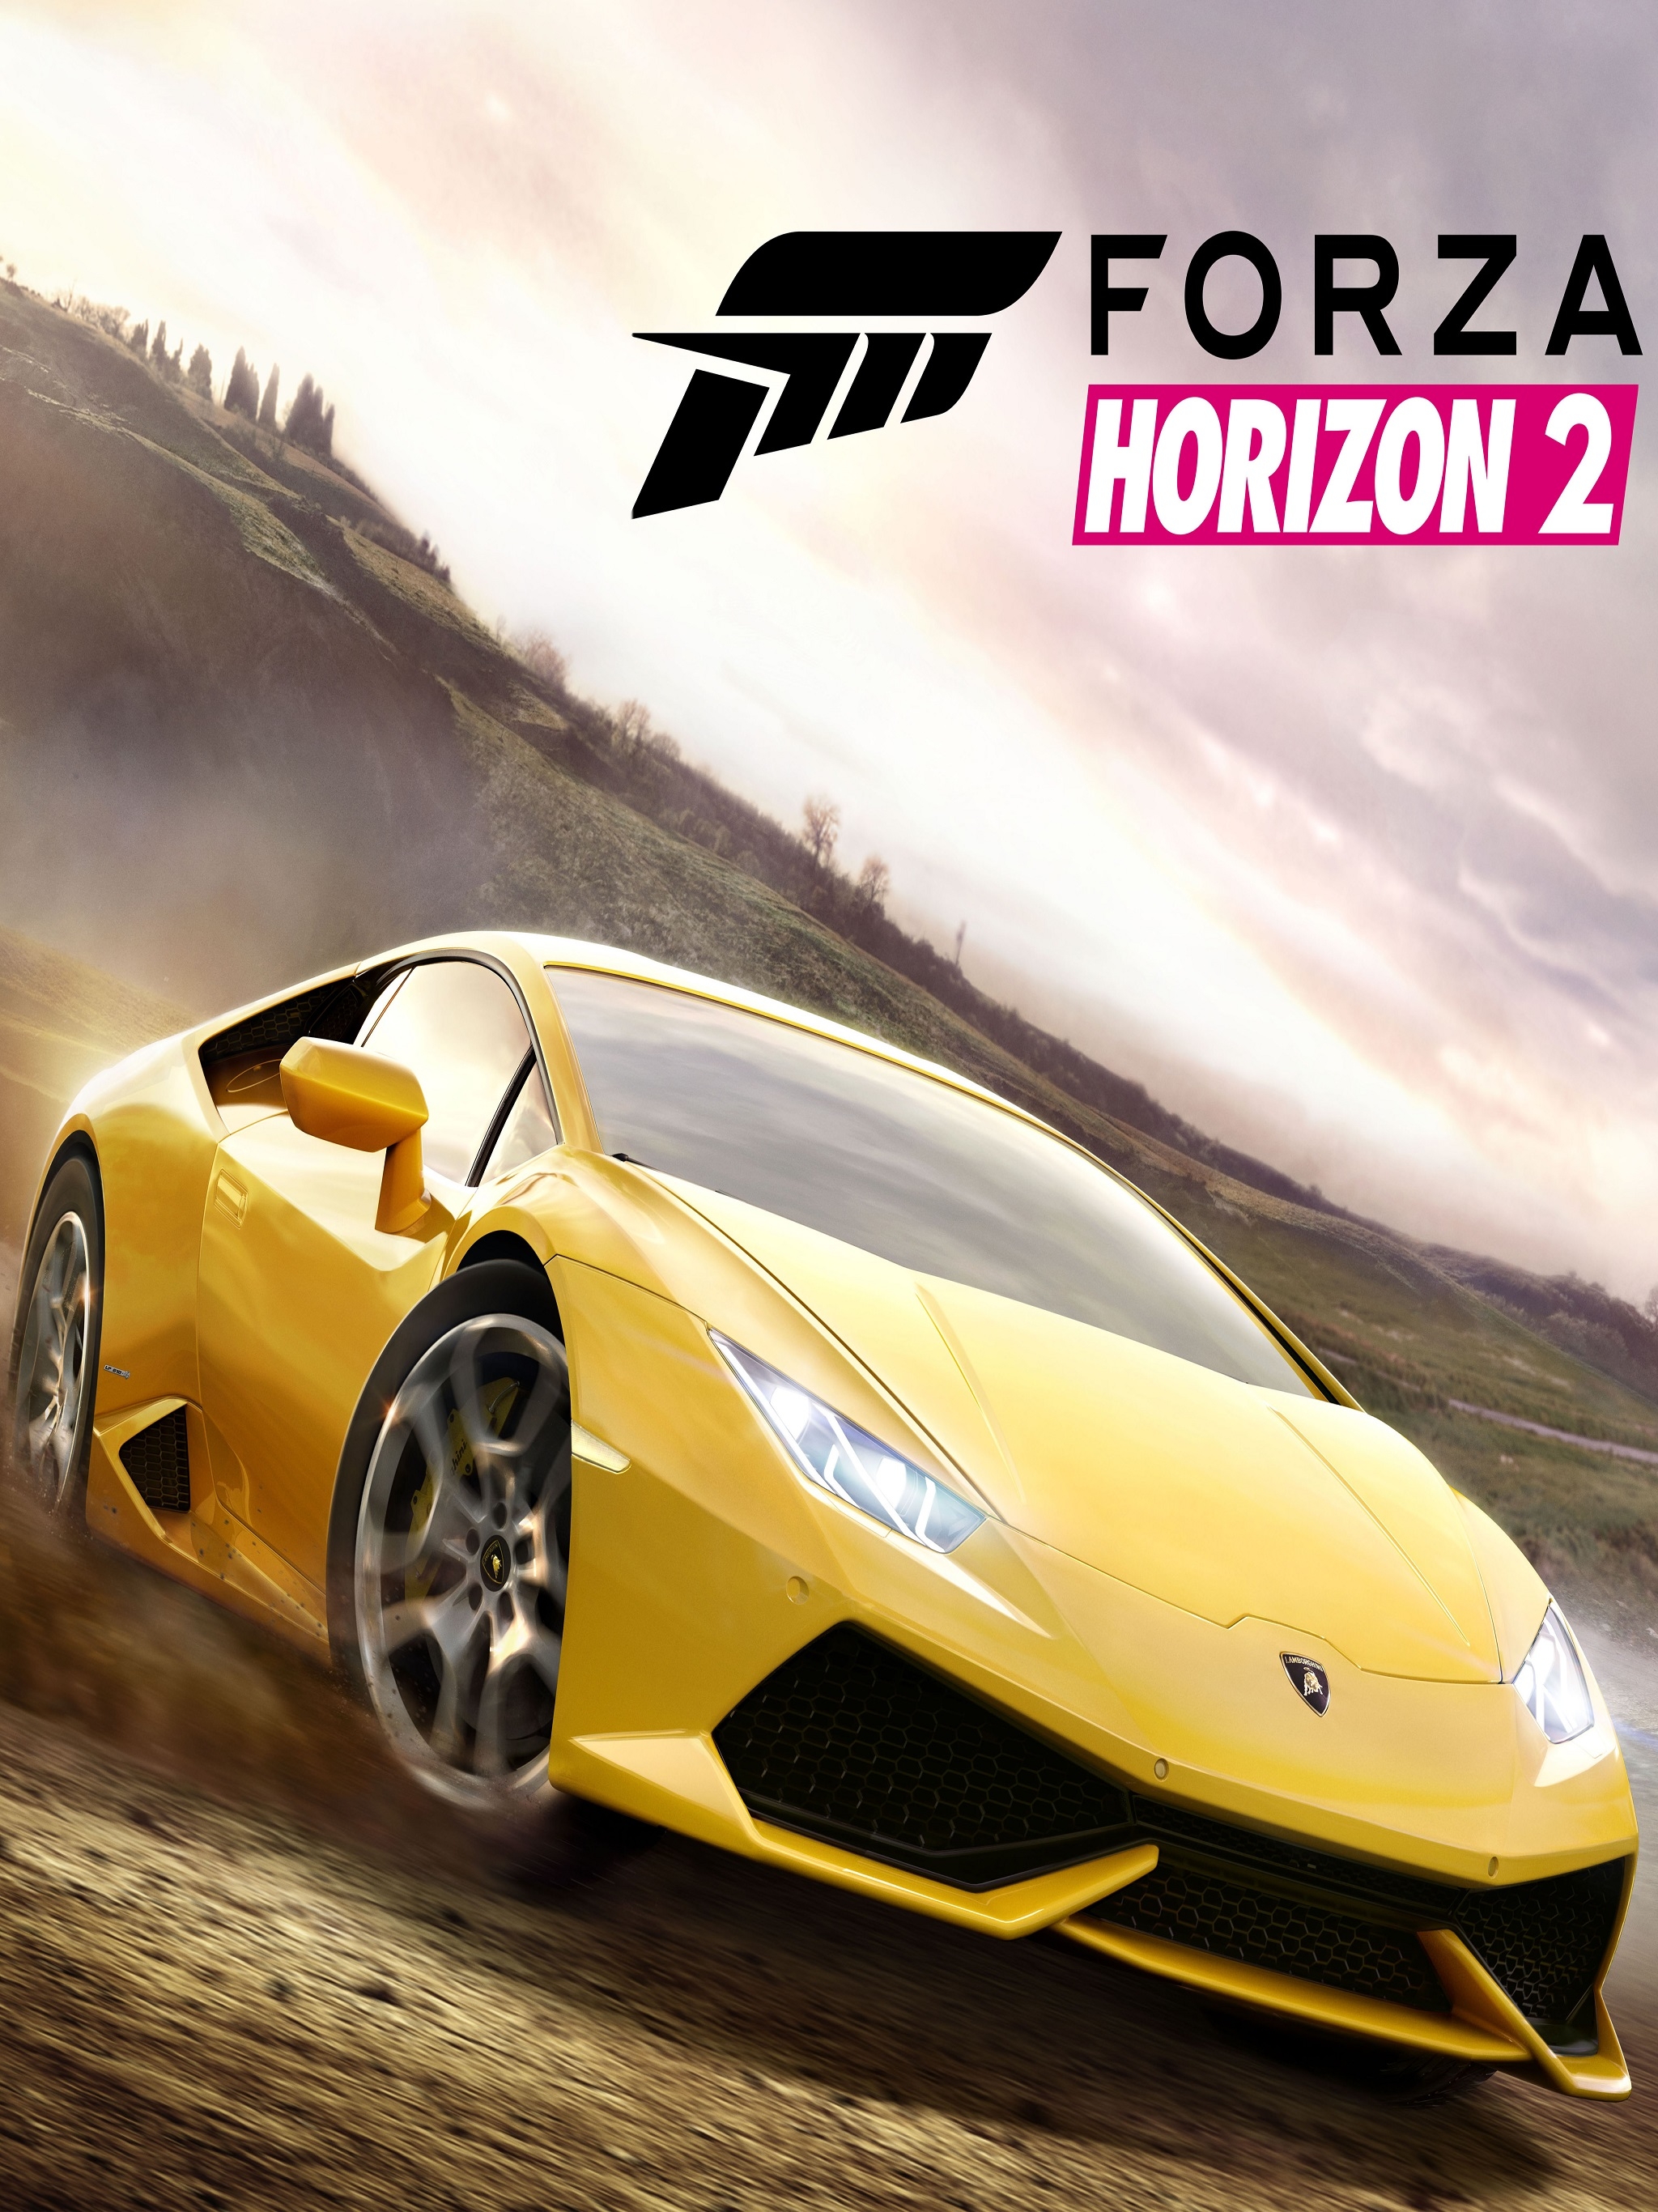 Forza Horizon 2 for Apple iPad Pro resolution